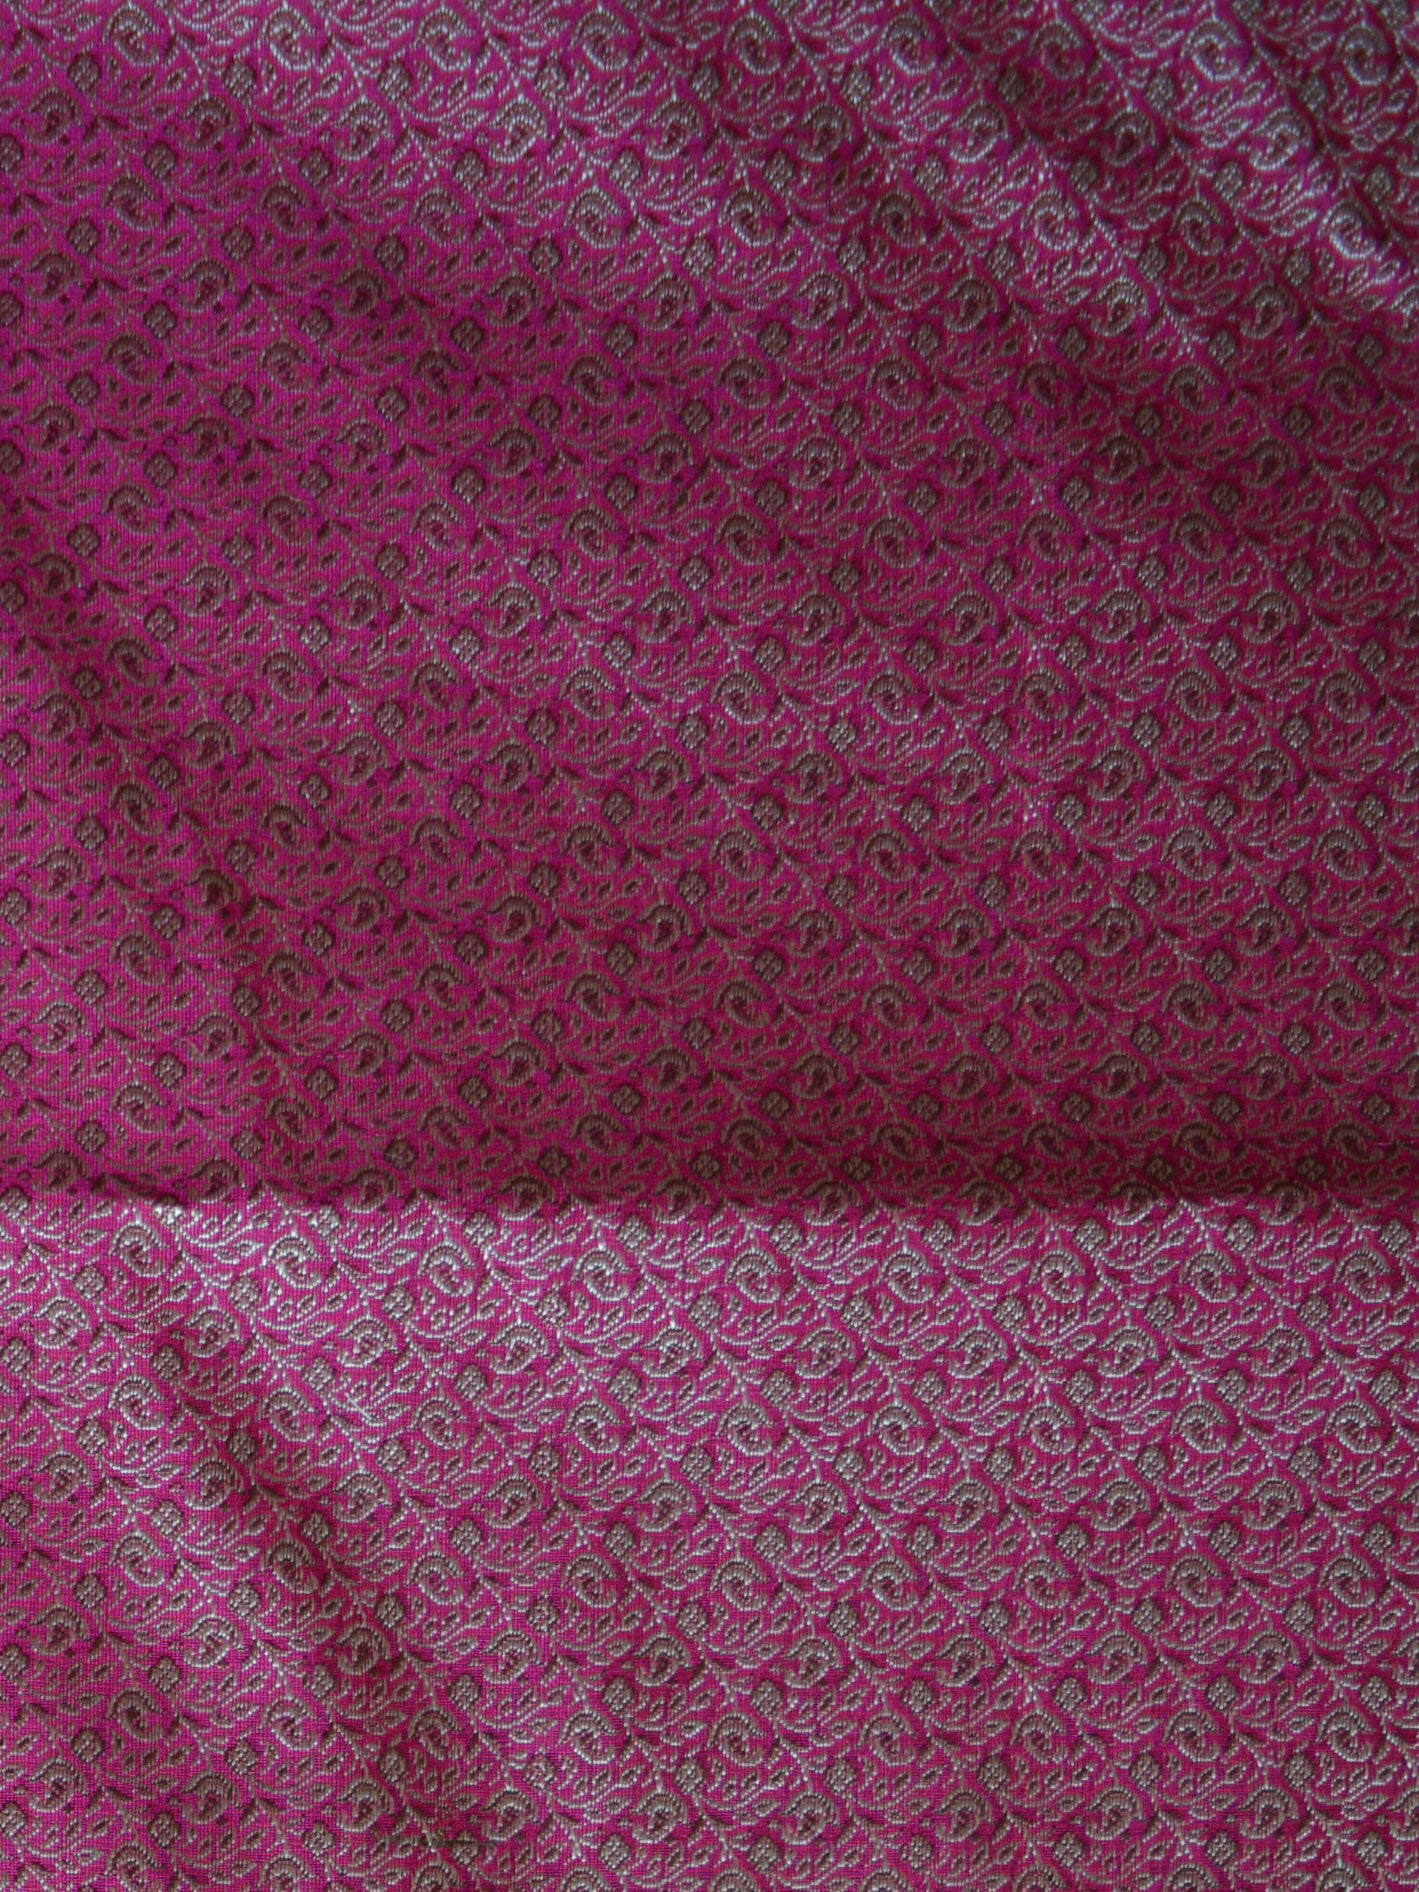 Banarasee/Banarasi Salwar Kameez Cotton Silk Resham Woven With Buti Design Fabric-Deep Pink